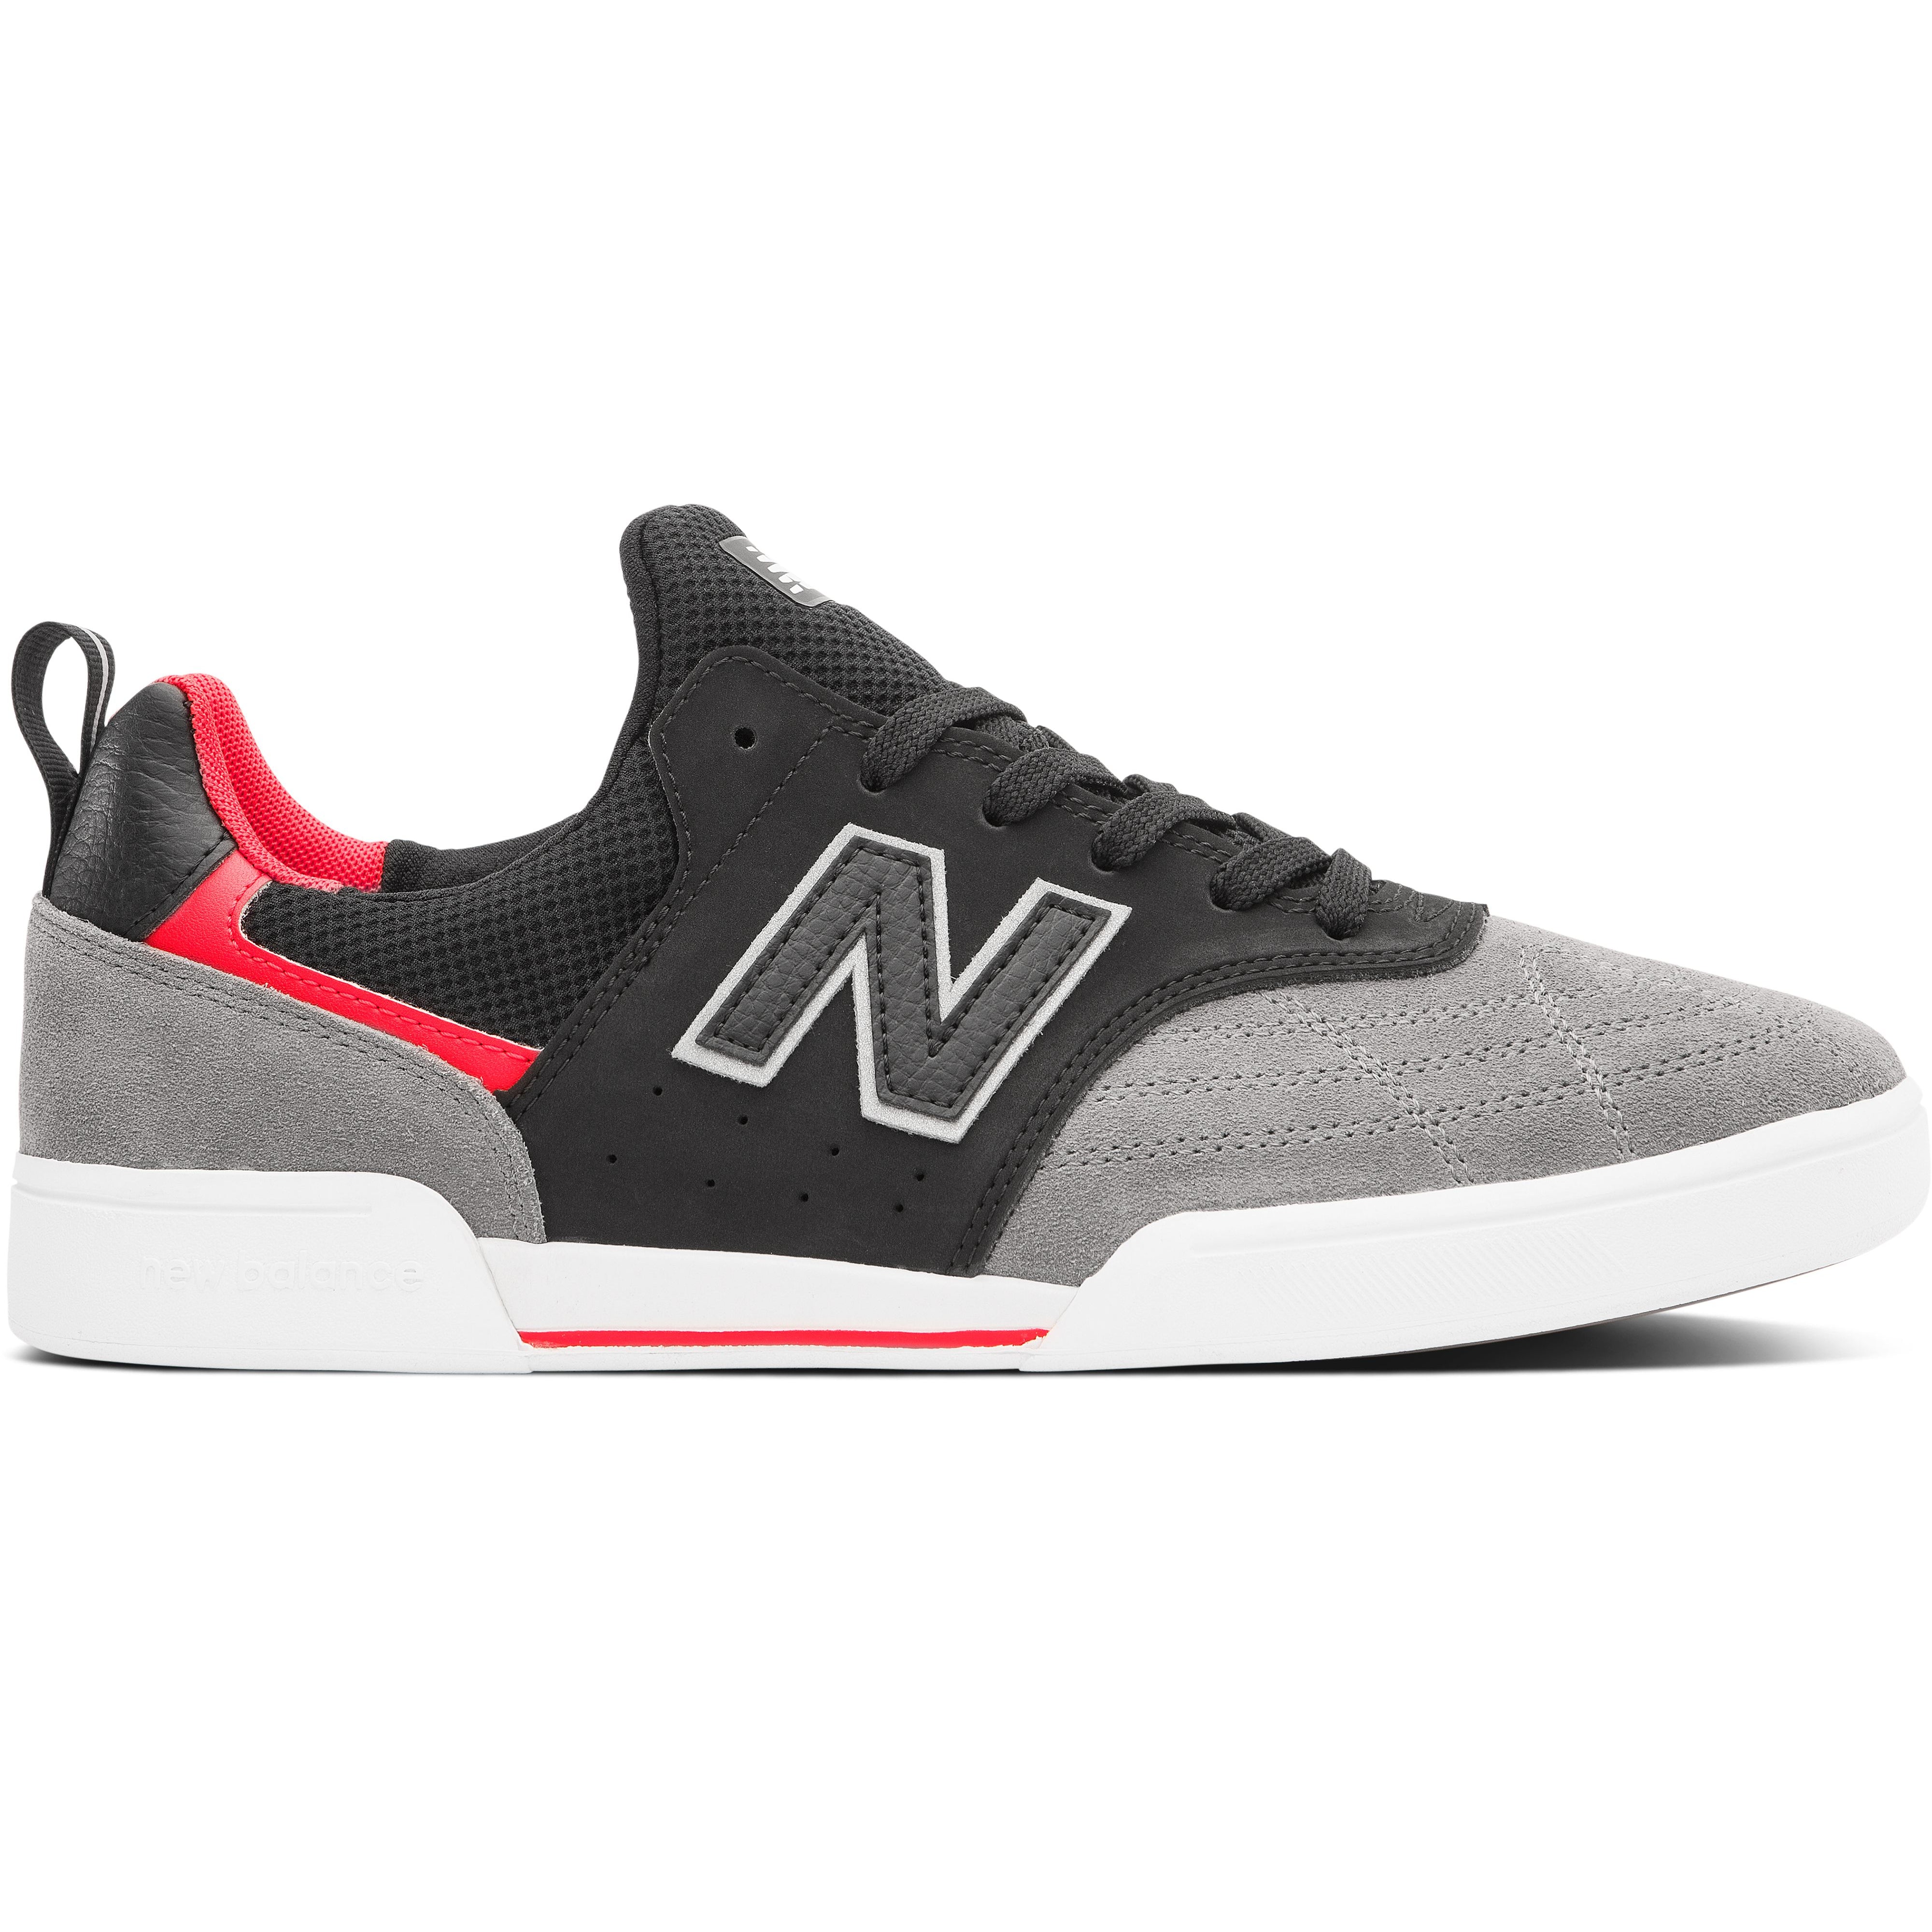 Grey/Black 288 Sport NB Numeric Skateboard Shoe